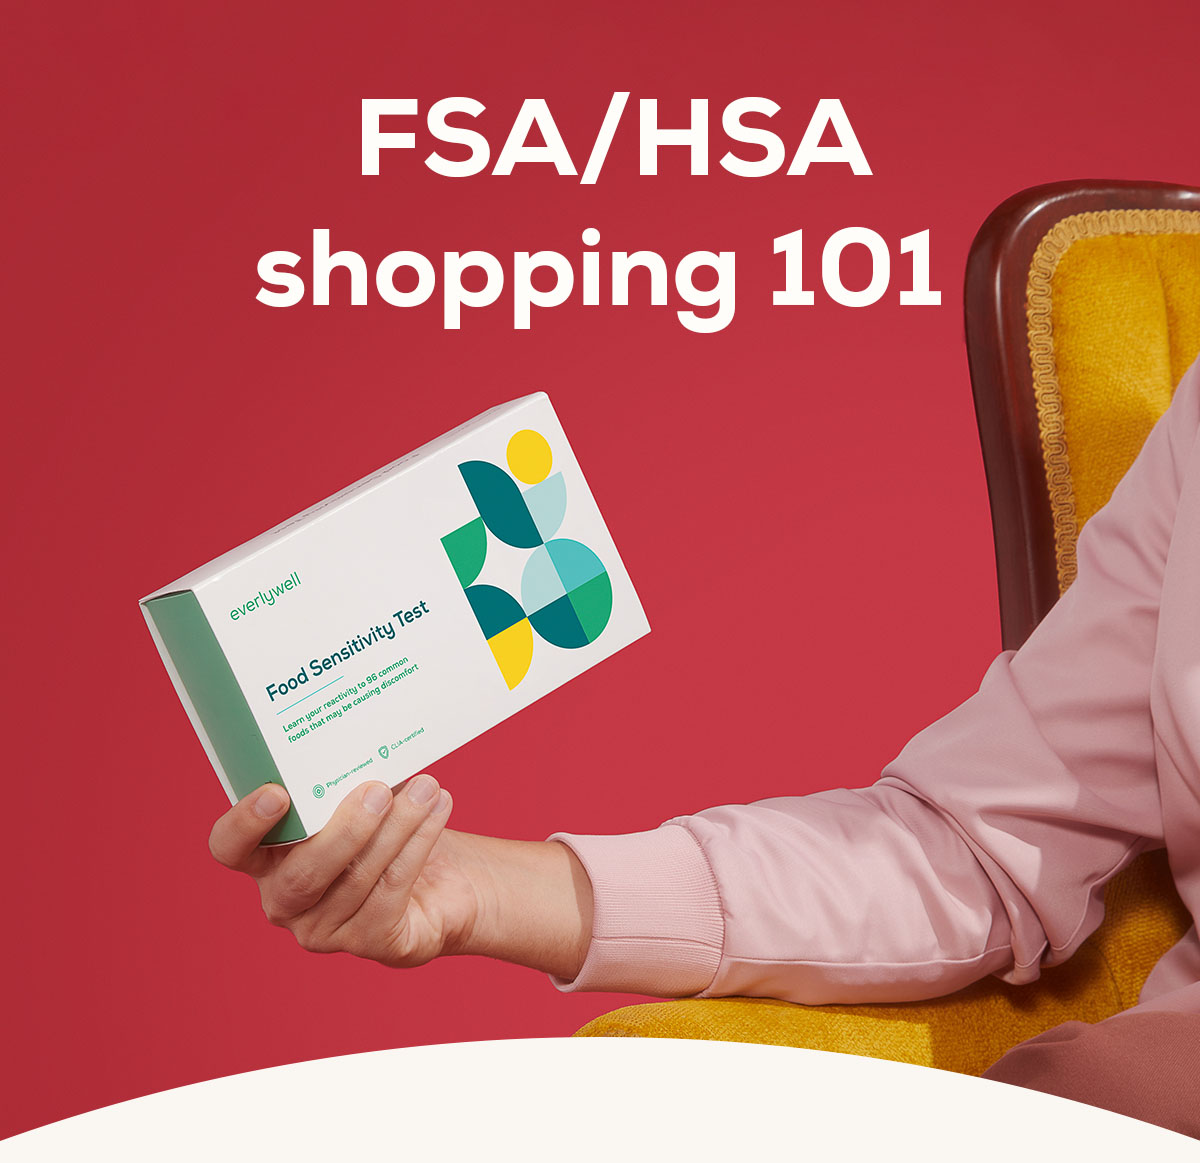 FSA and HSA Shop 